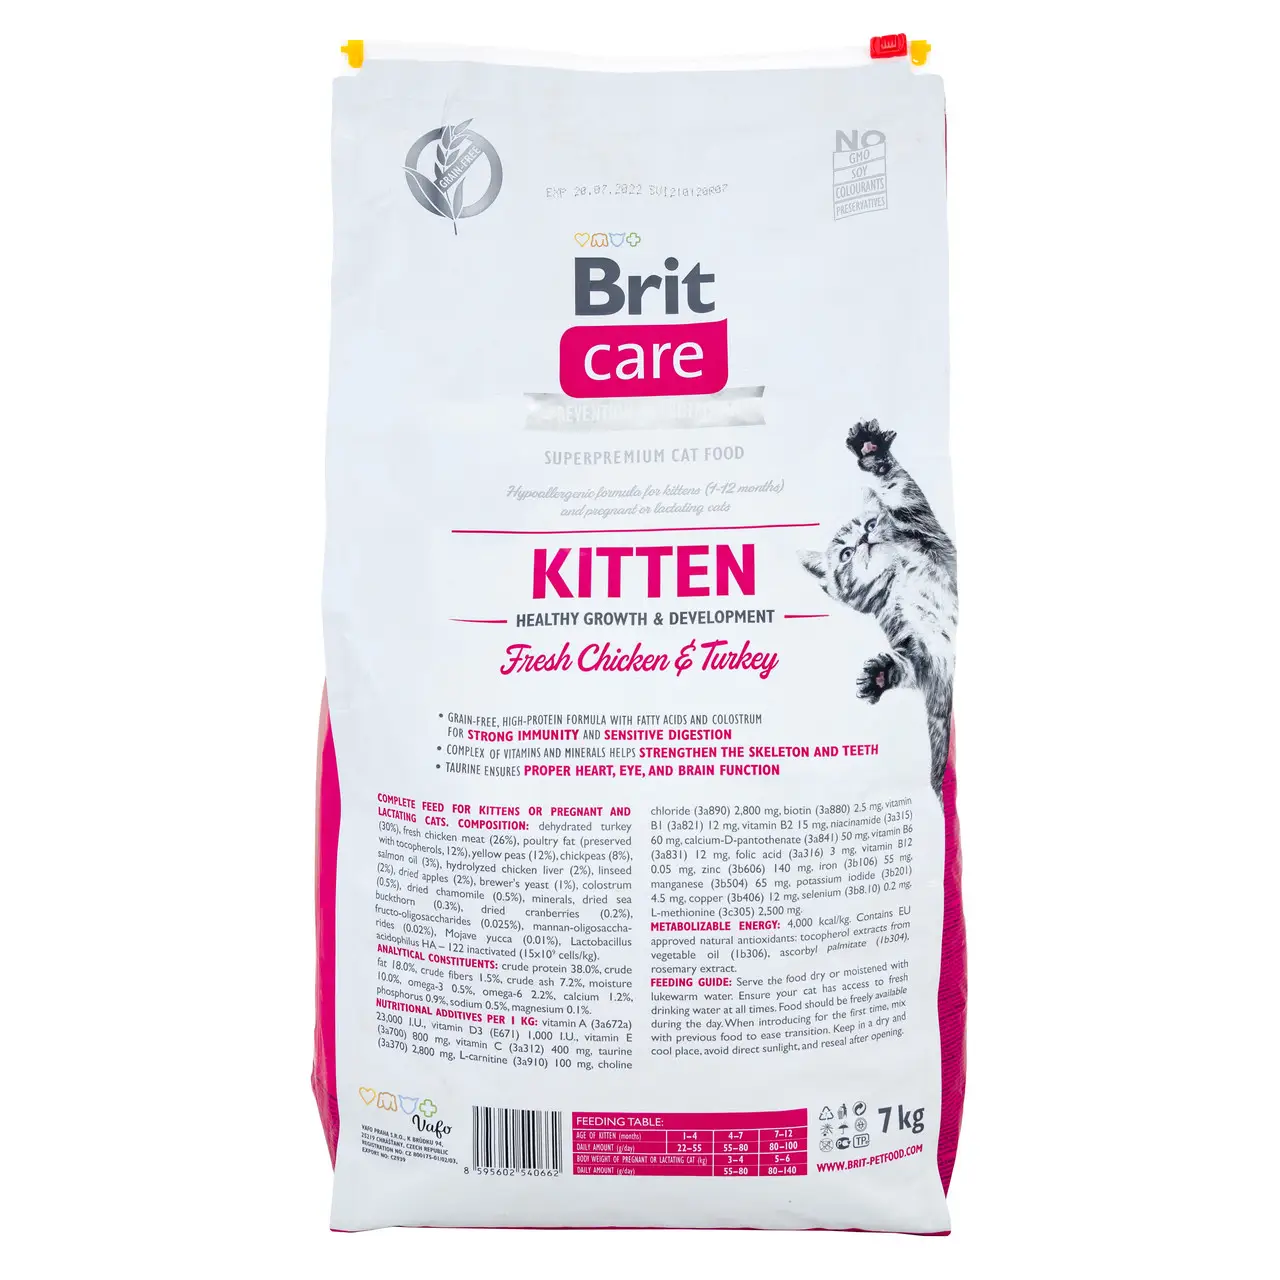 Brit Care Cat GF Kitten HGrowth & Development, 7кг (здорове зростання і розвиток)2